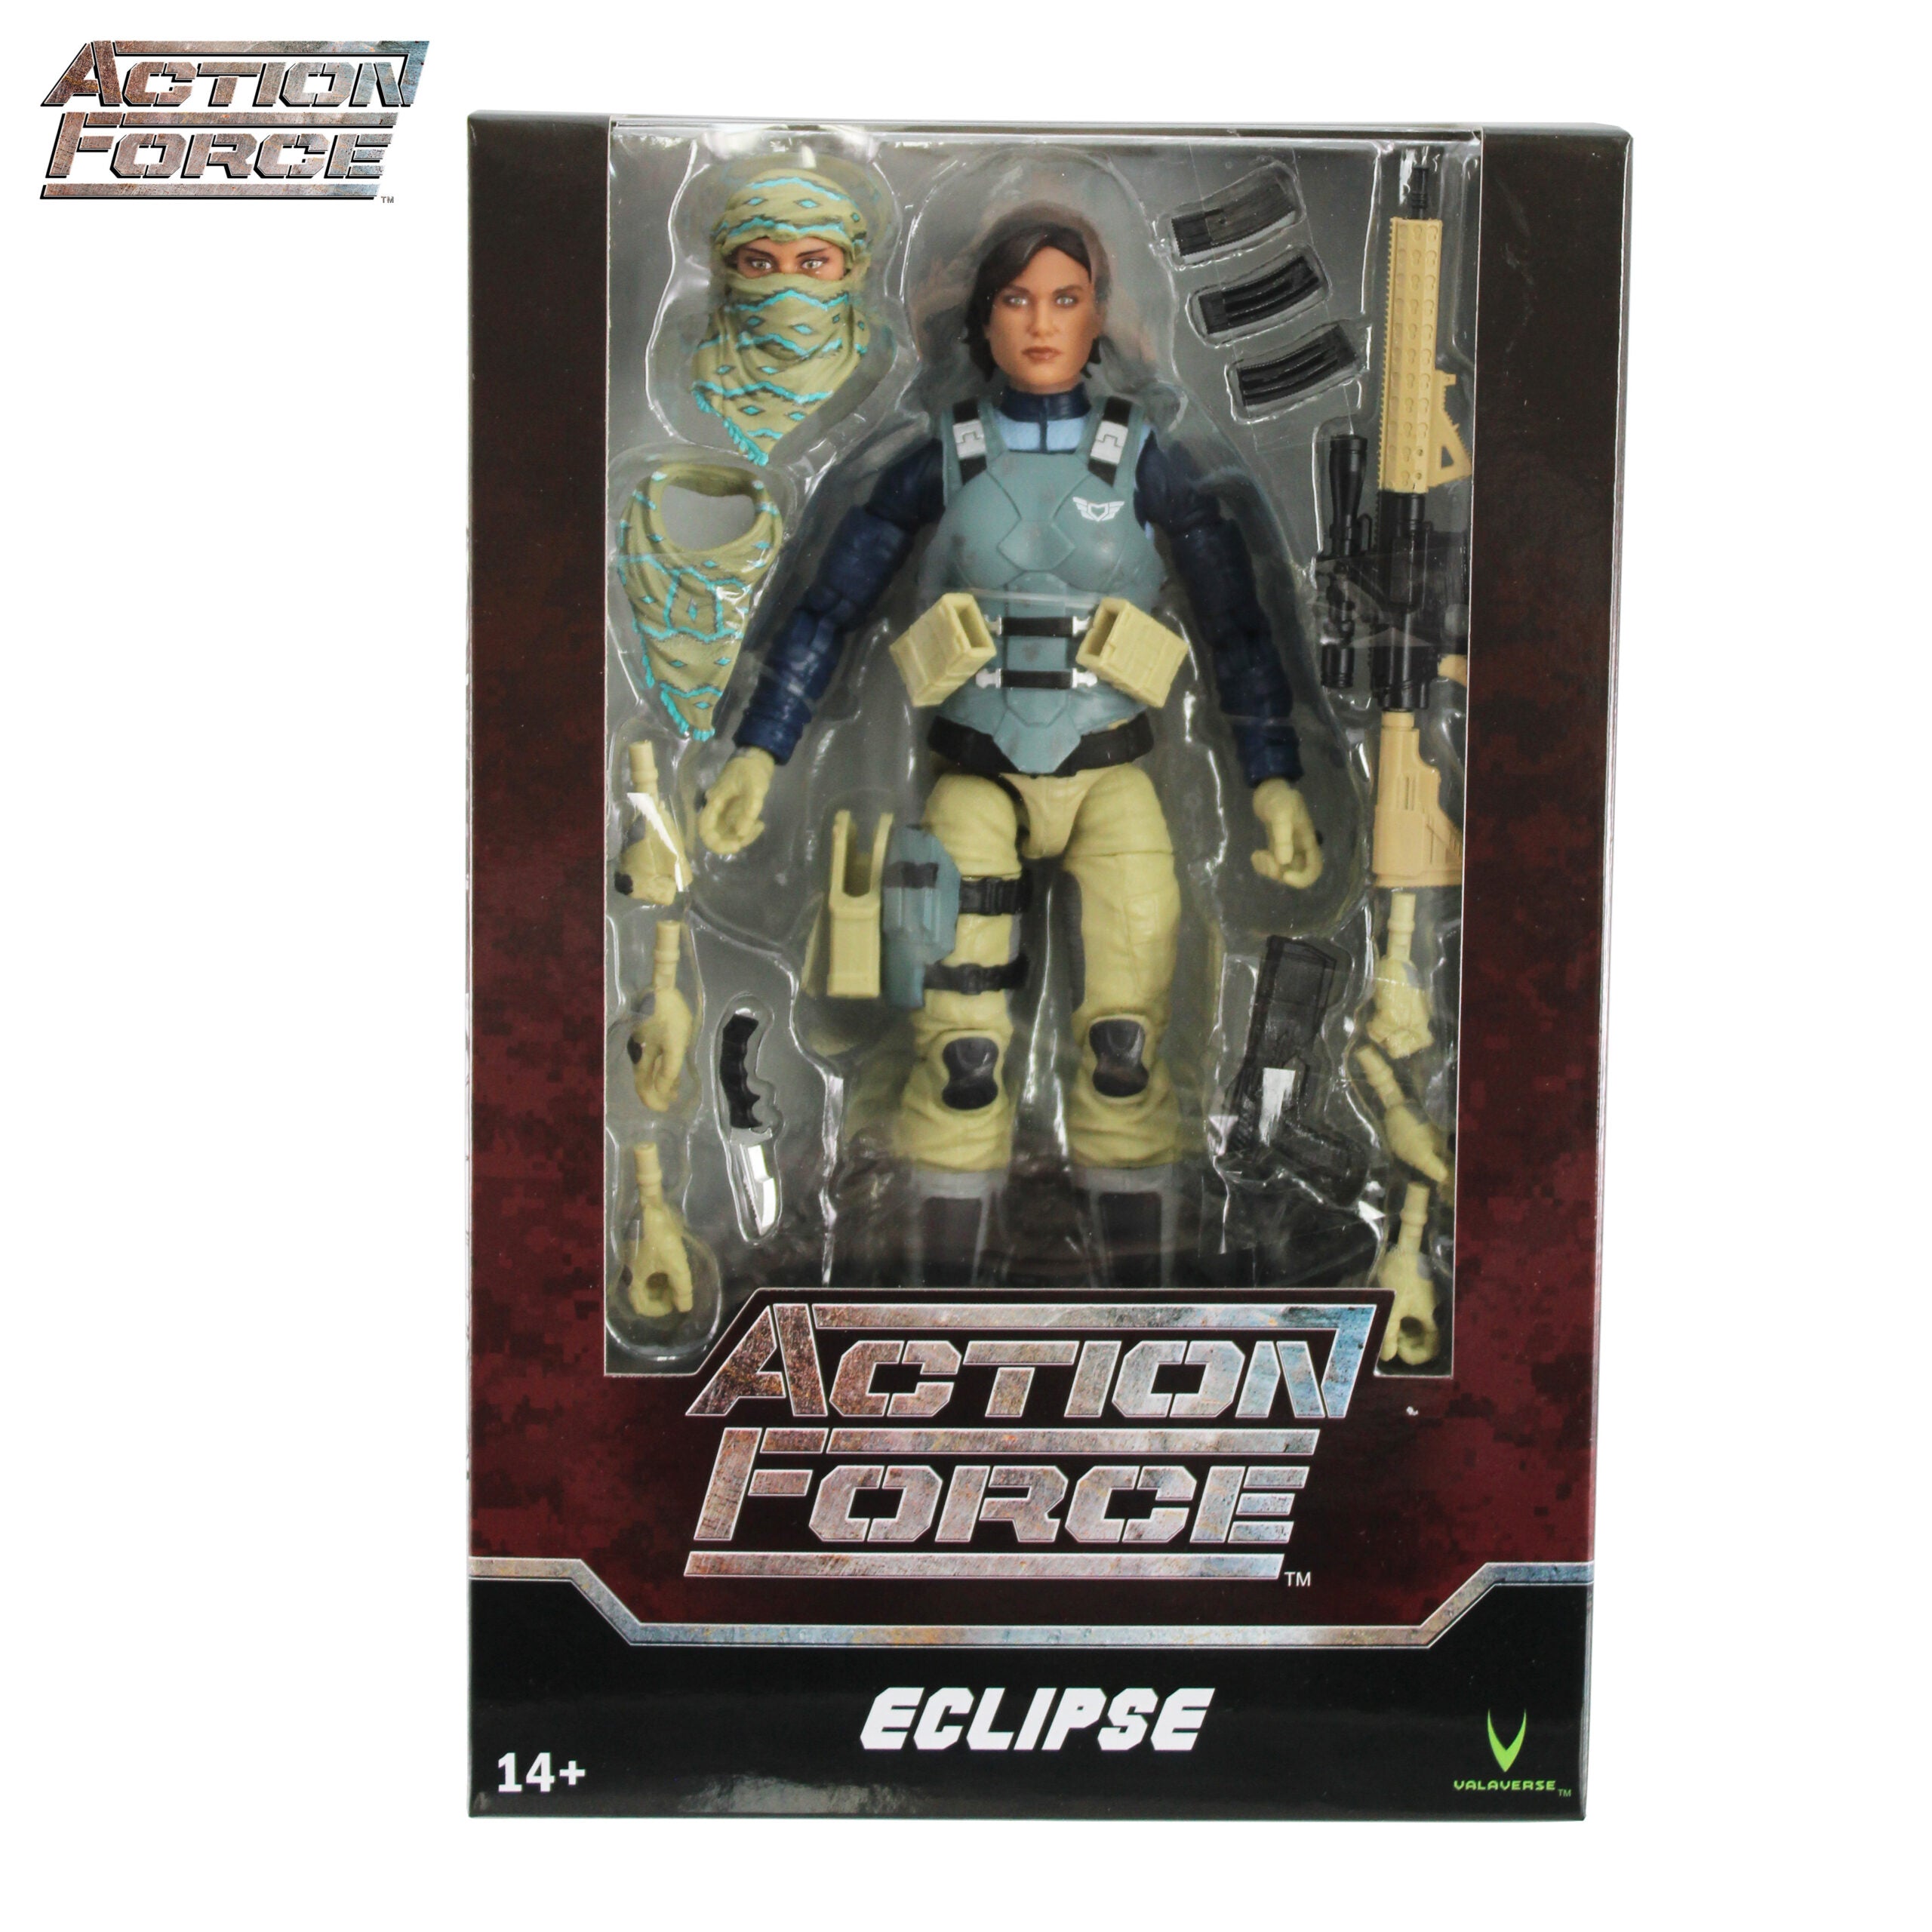 Valaverse Valaverse Action Force Eclipse 1/12 Scale Action Figure - Series 3